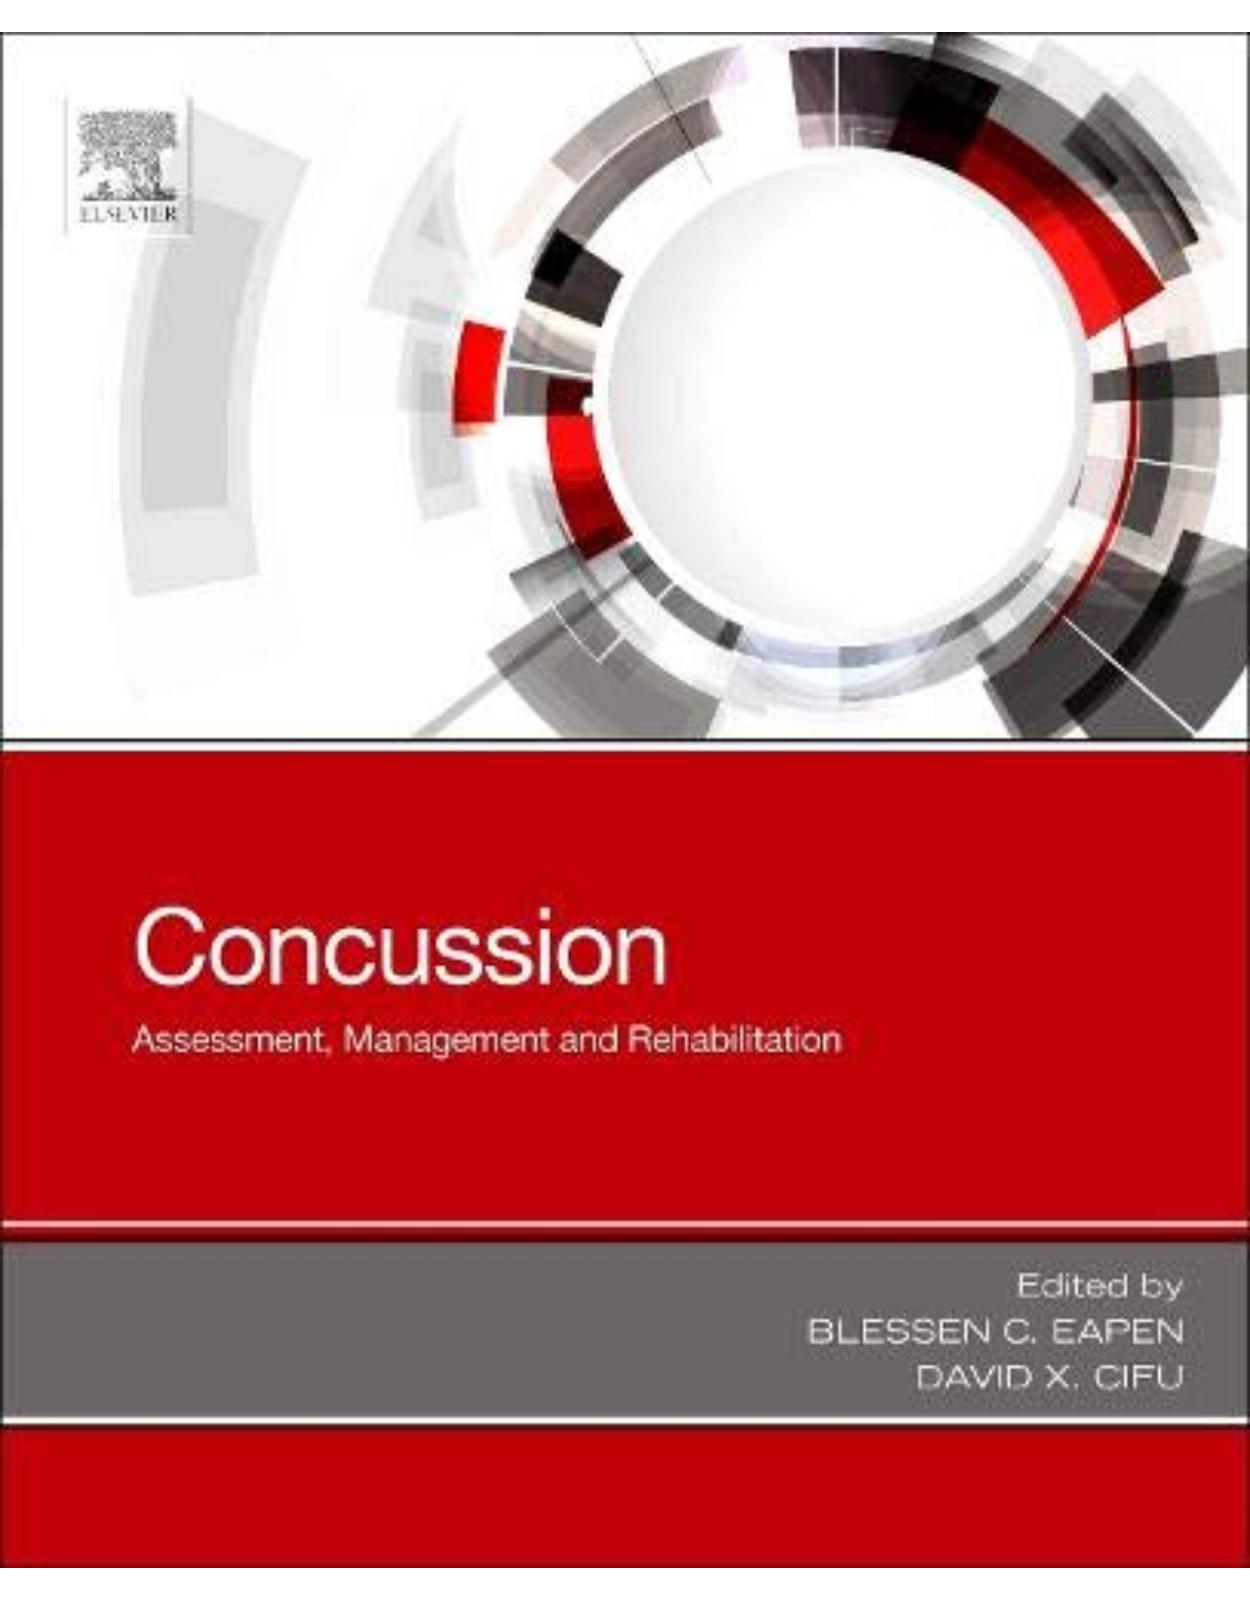 Concussion, Assessment, Management and Rehabilitation